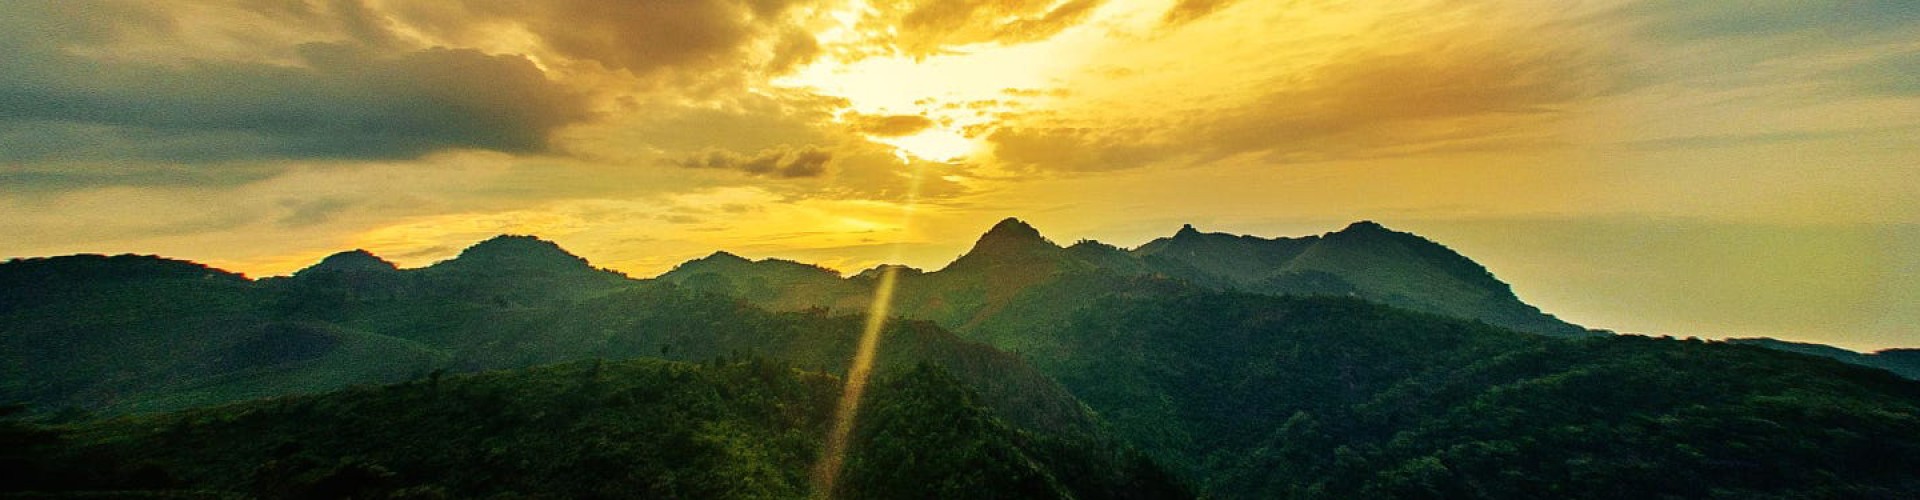 Top Attractions in Laos